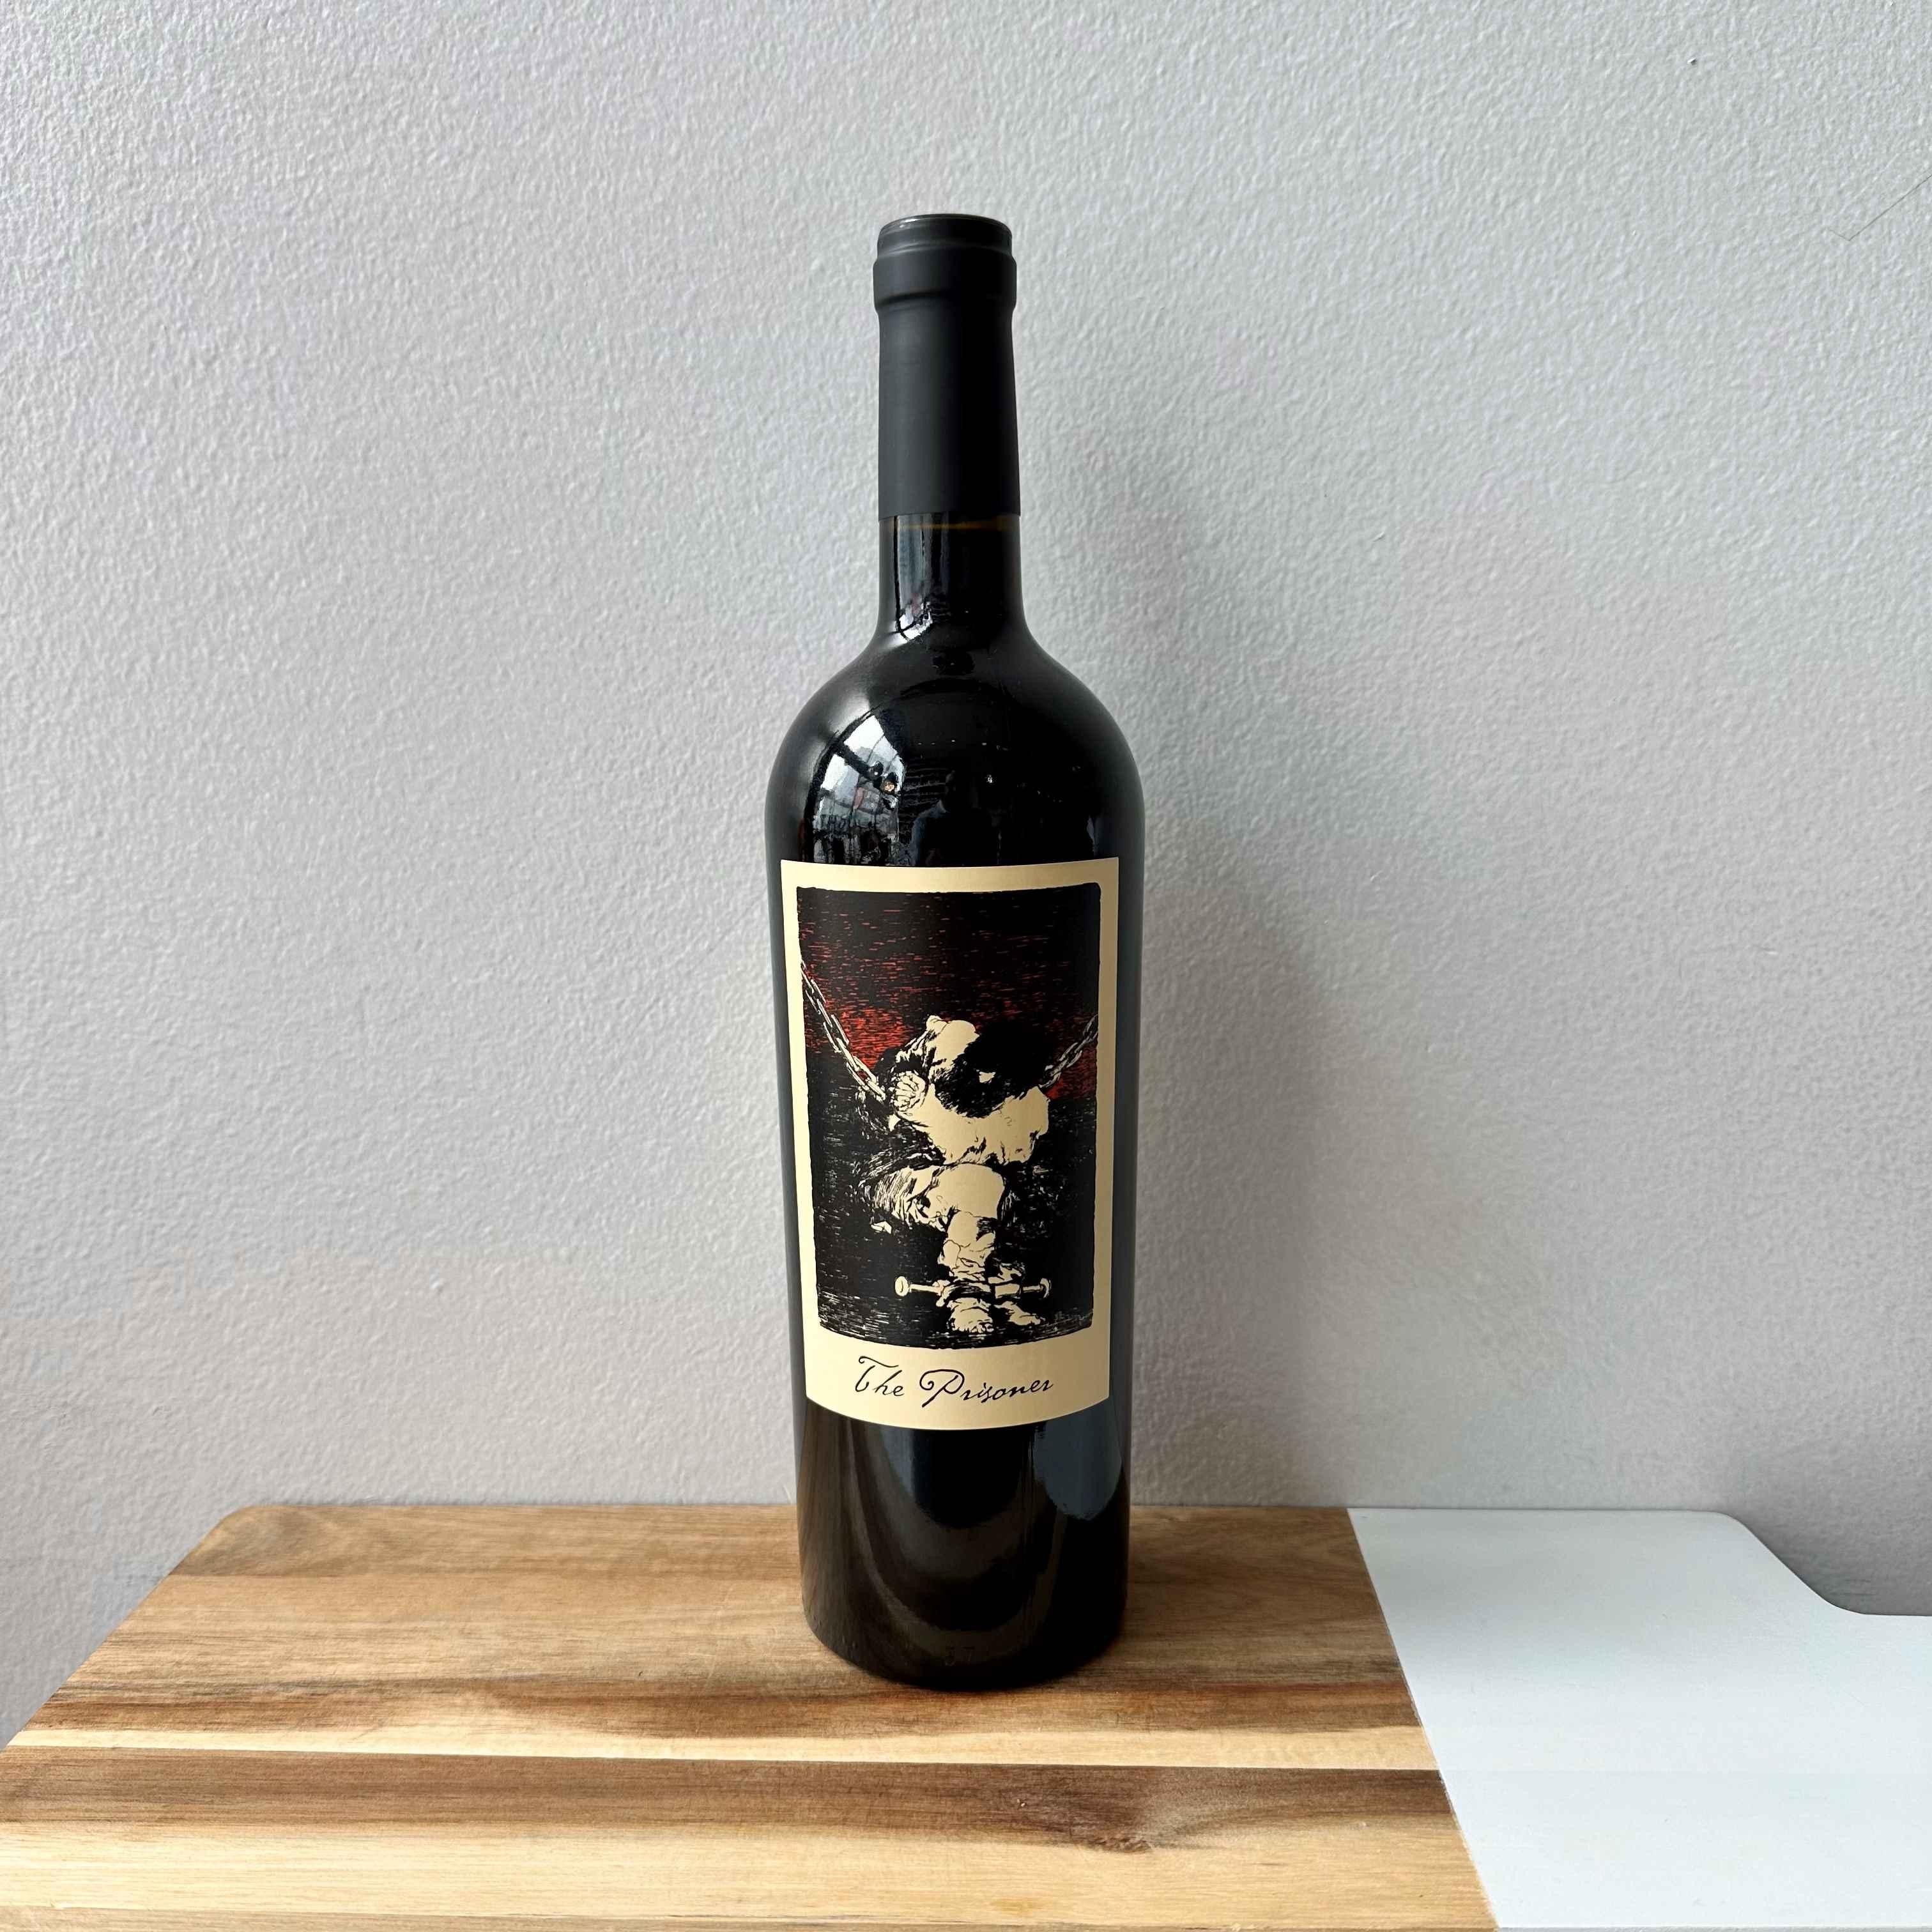 The Prisoner Wine Company "The Prisoner" Red Blend 2022 California